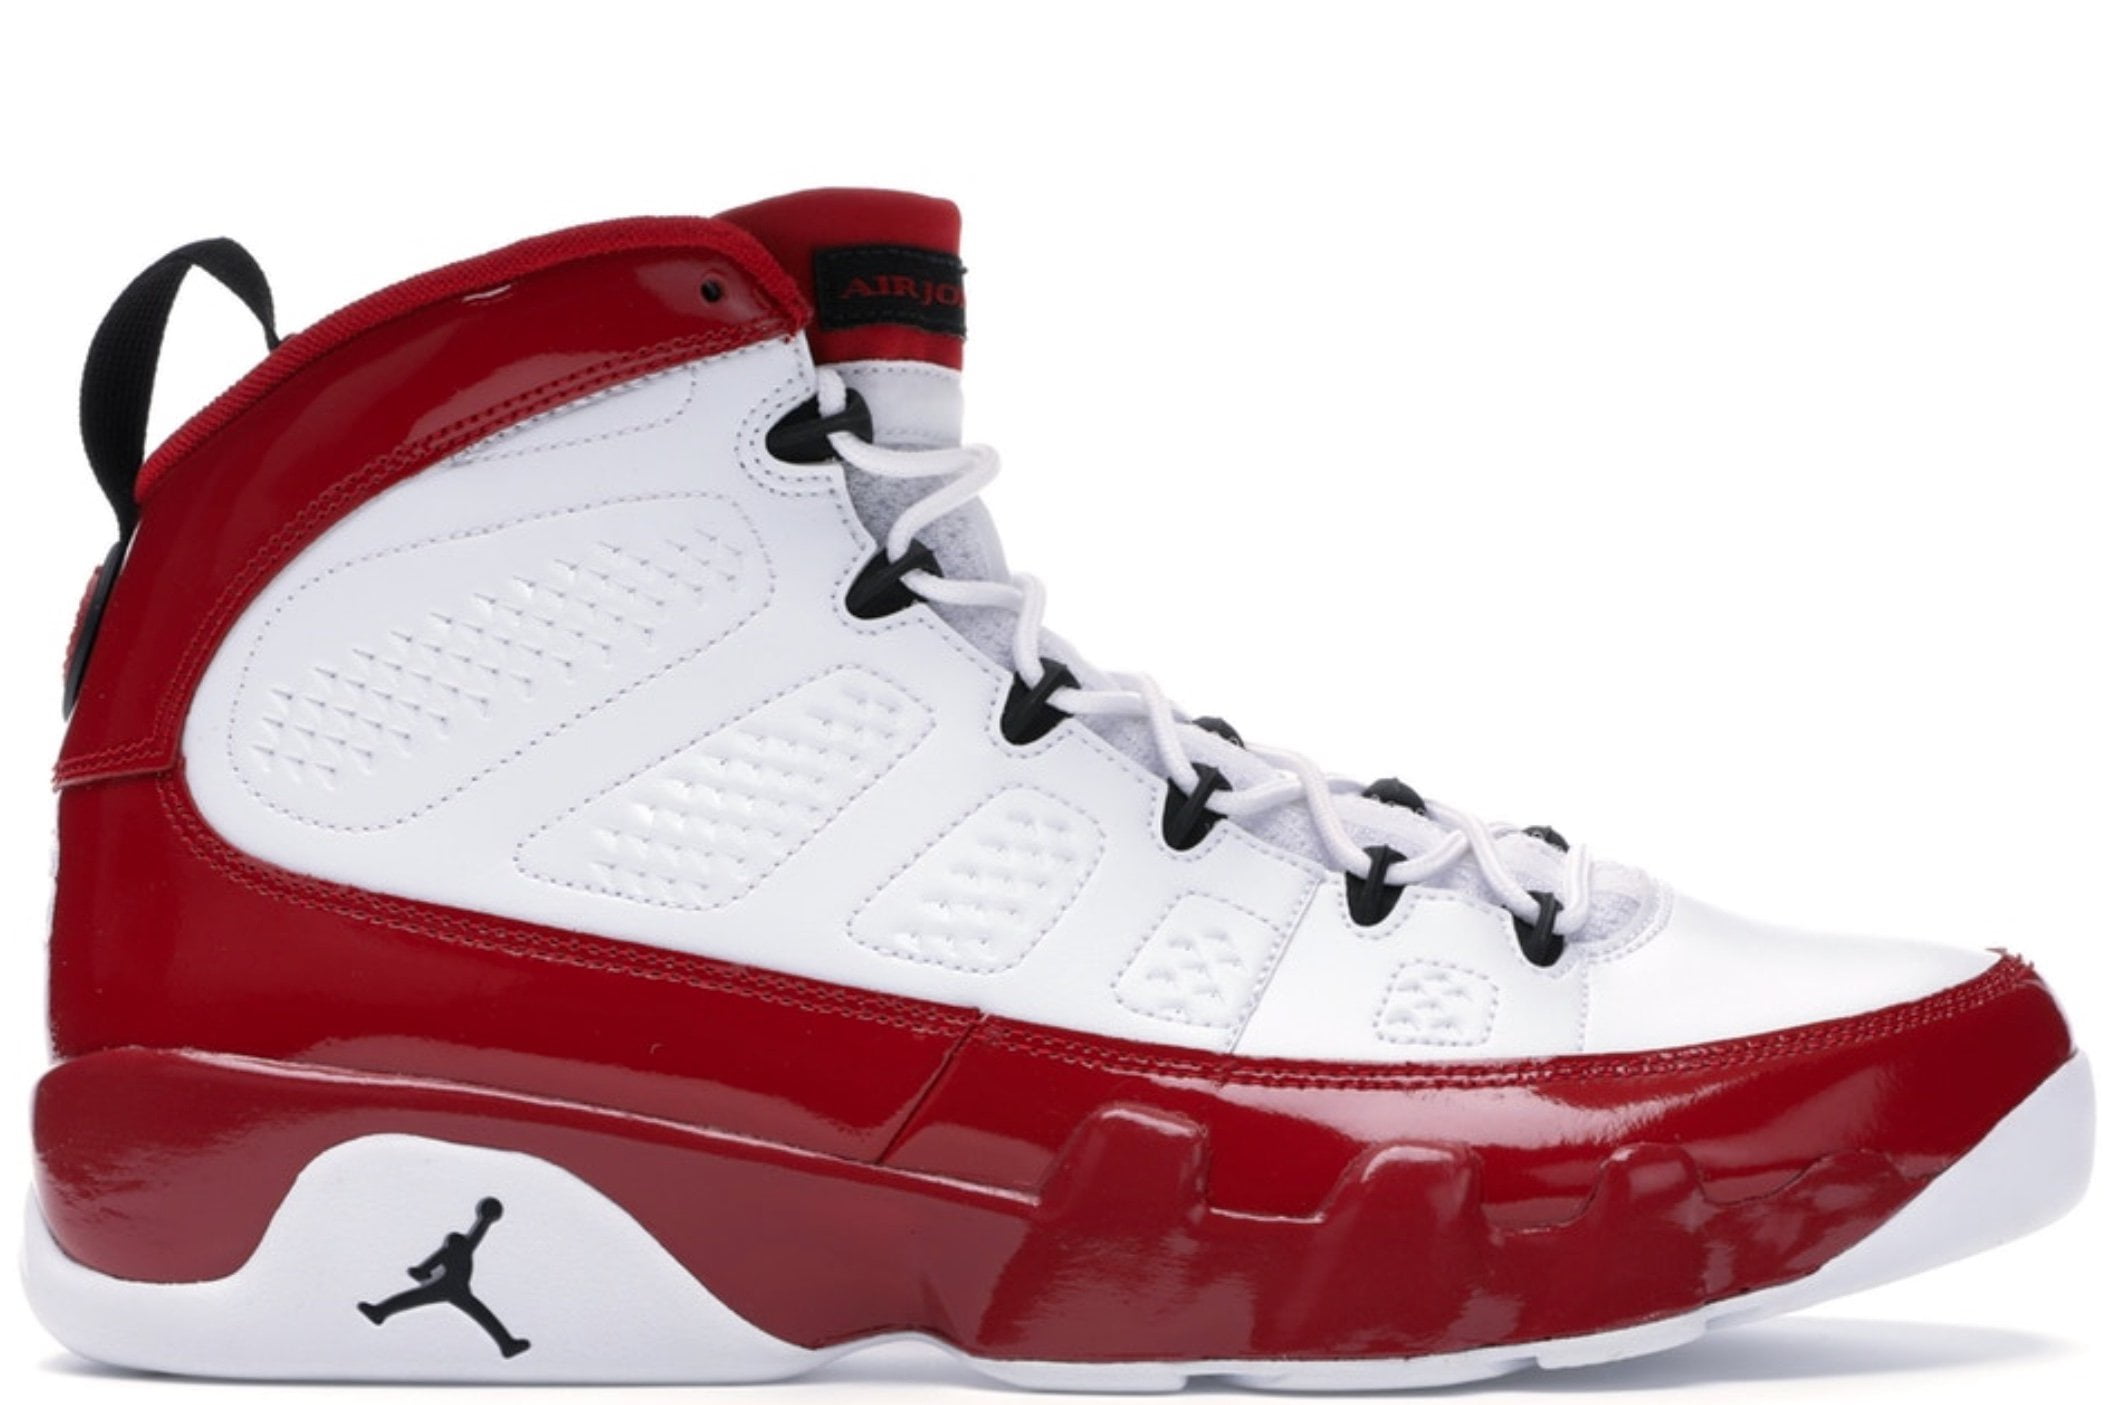 Air Jordan 9 Retro Cherry - Walmart.com